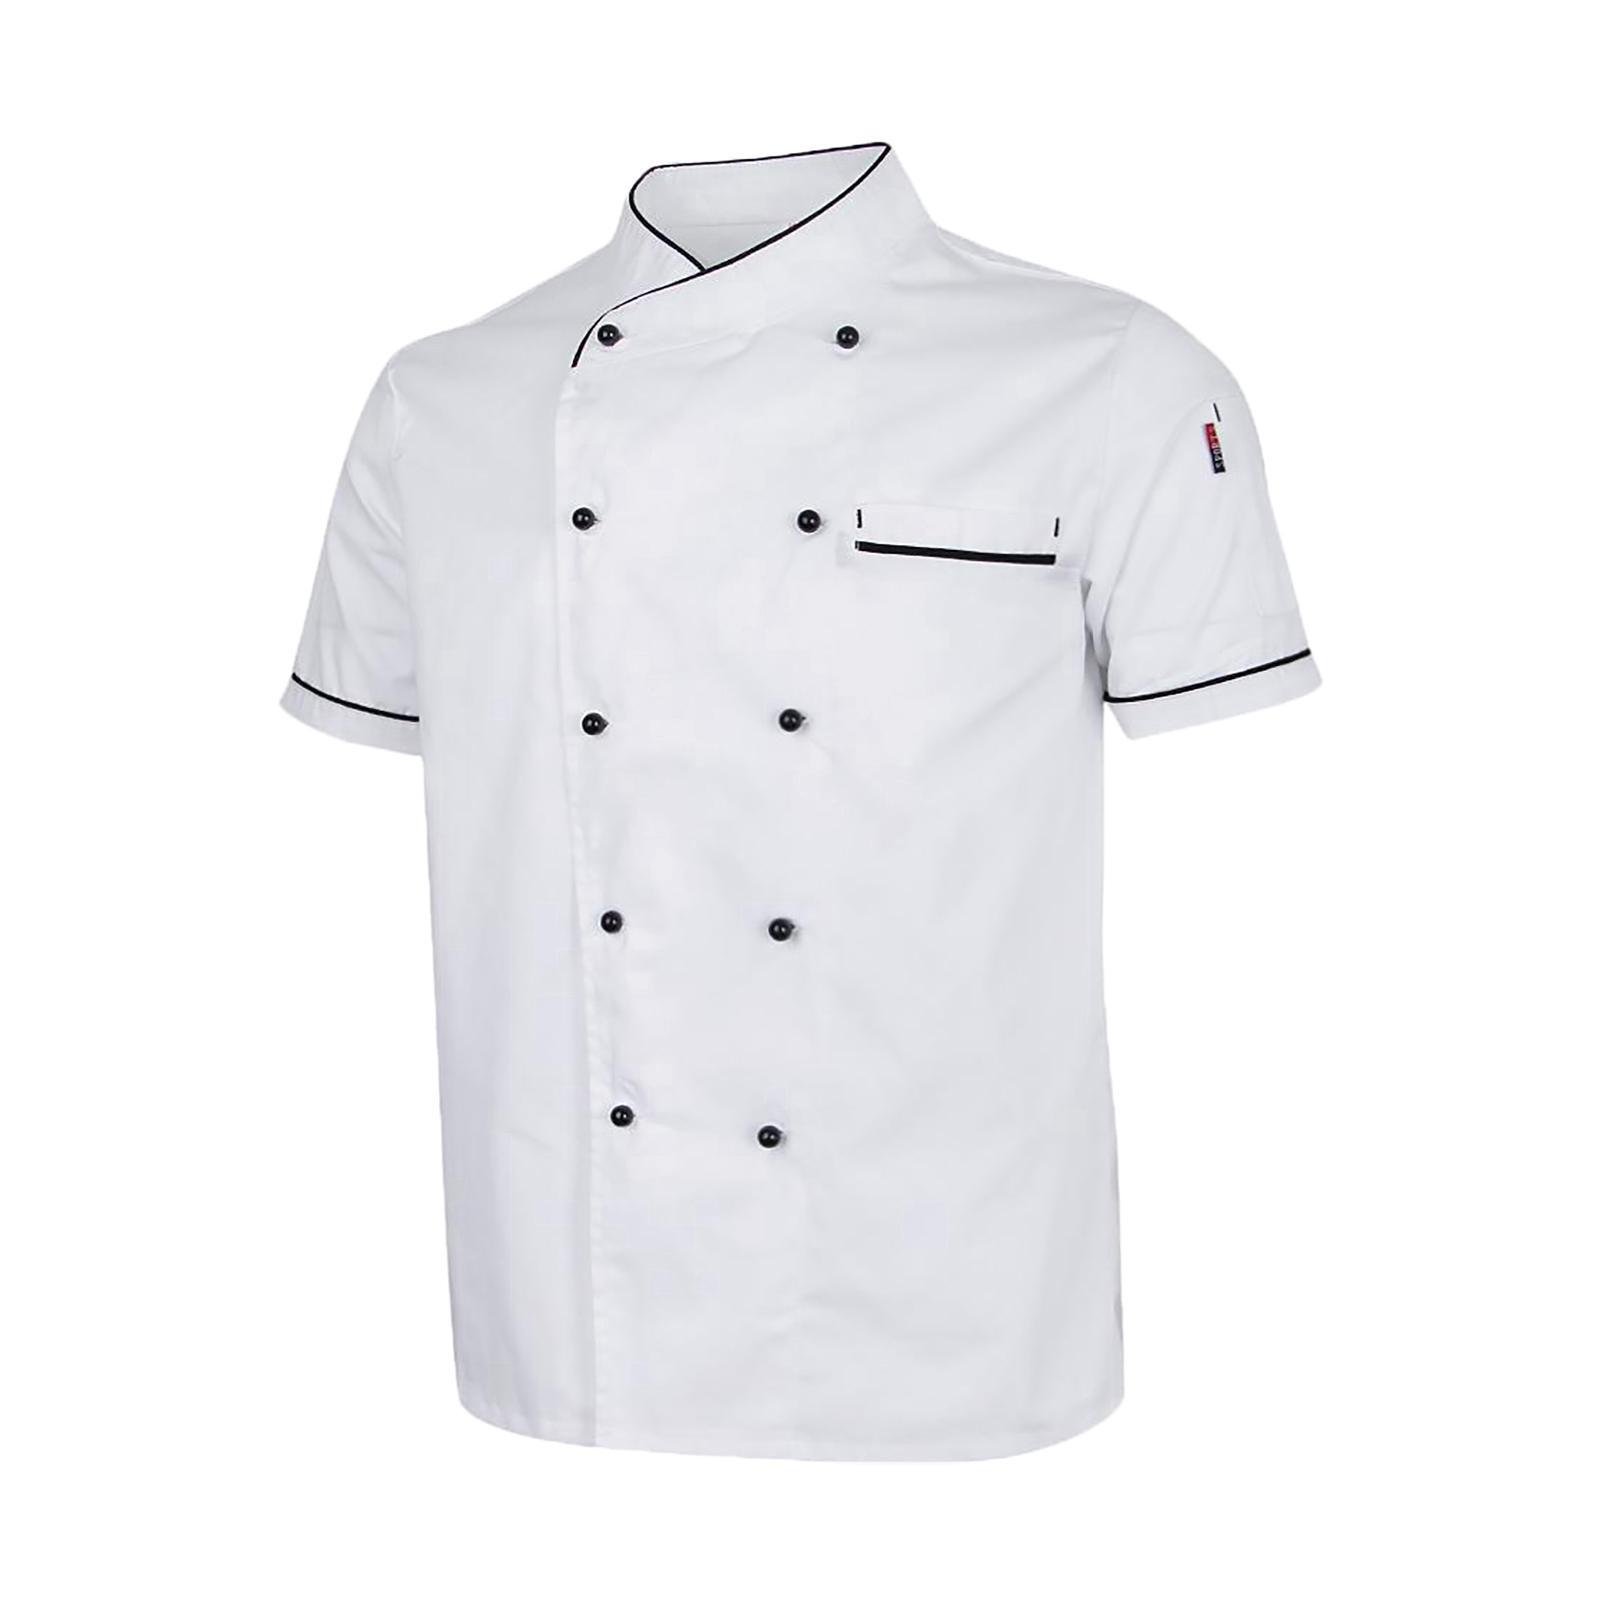 Chef Jacket Short Sleeve Uniform for Restaurant Kitchen Culinary School White